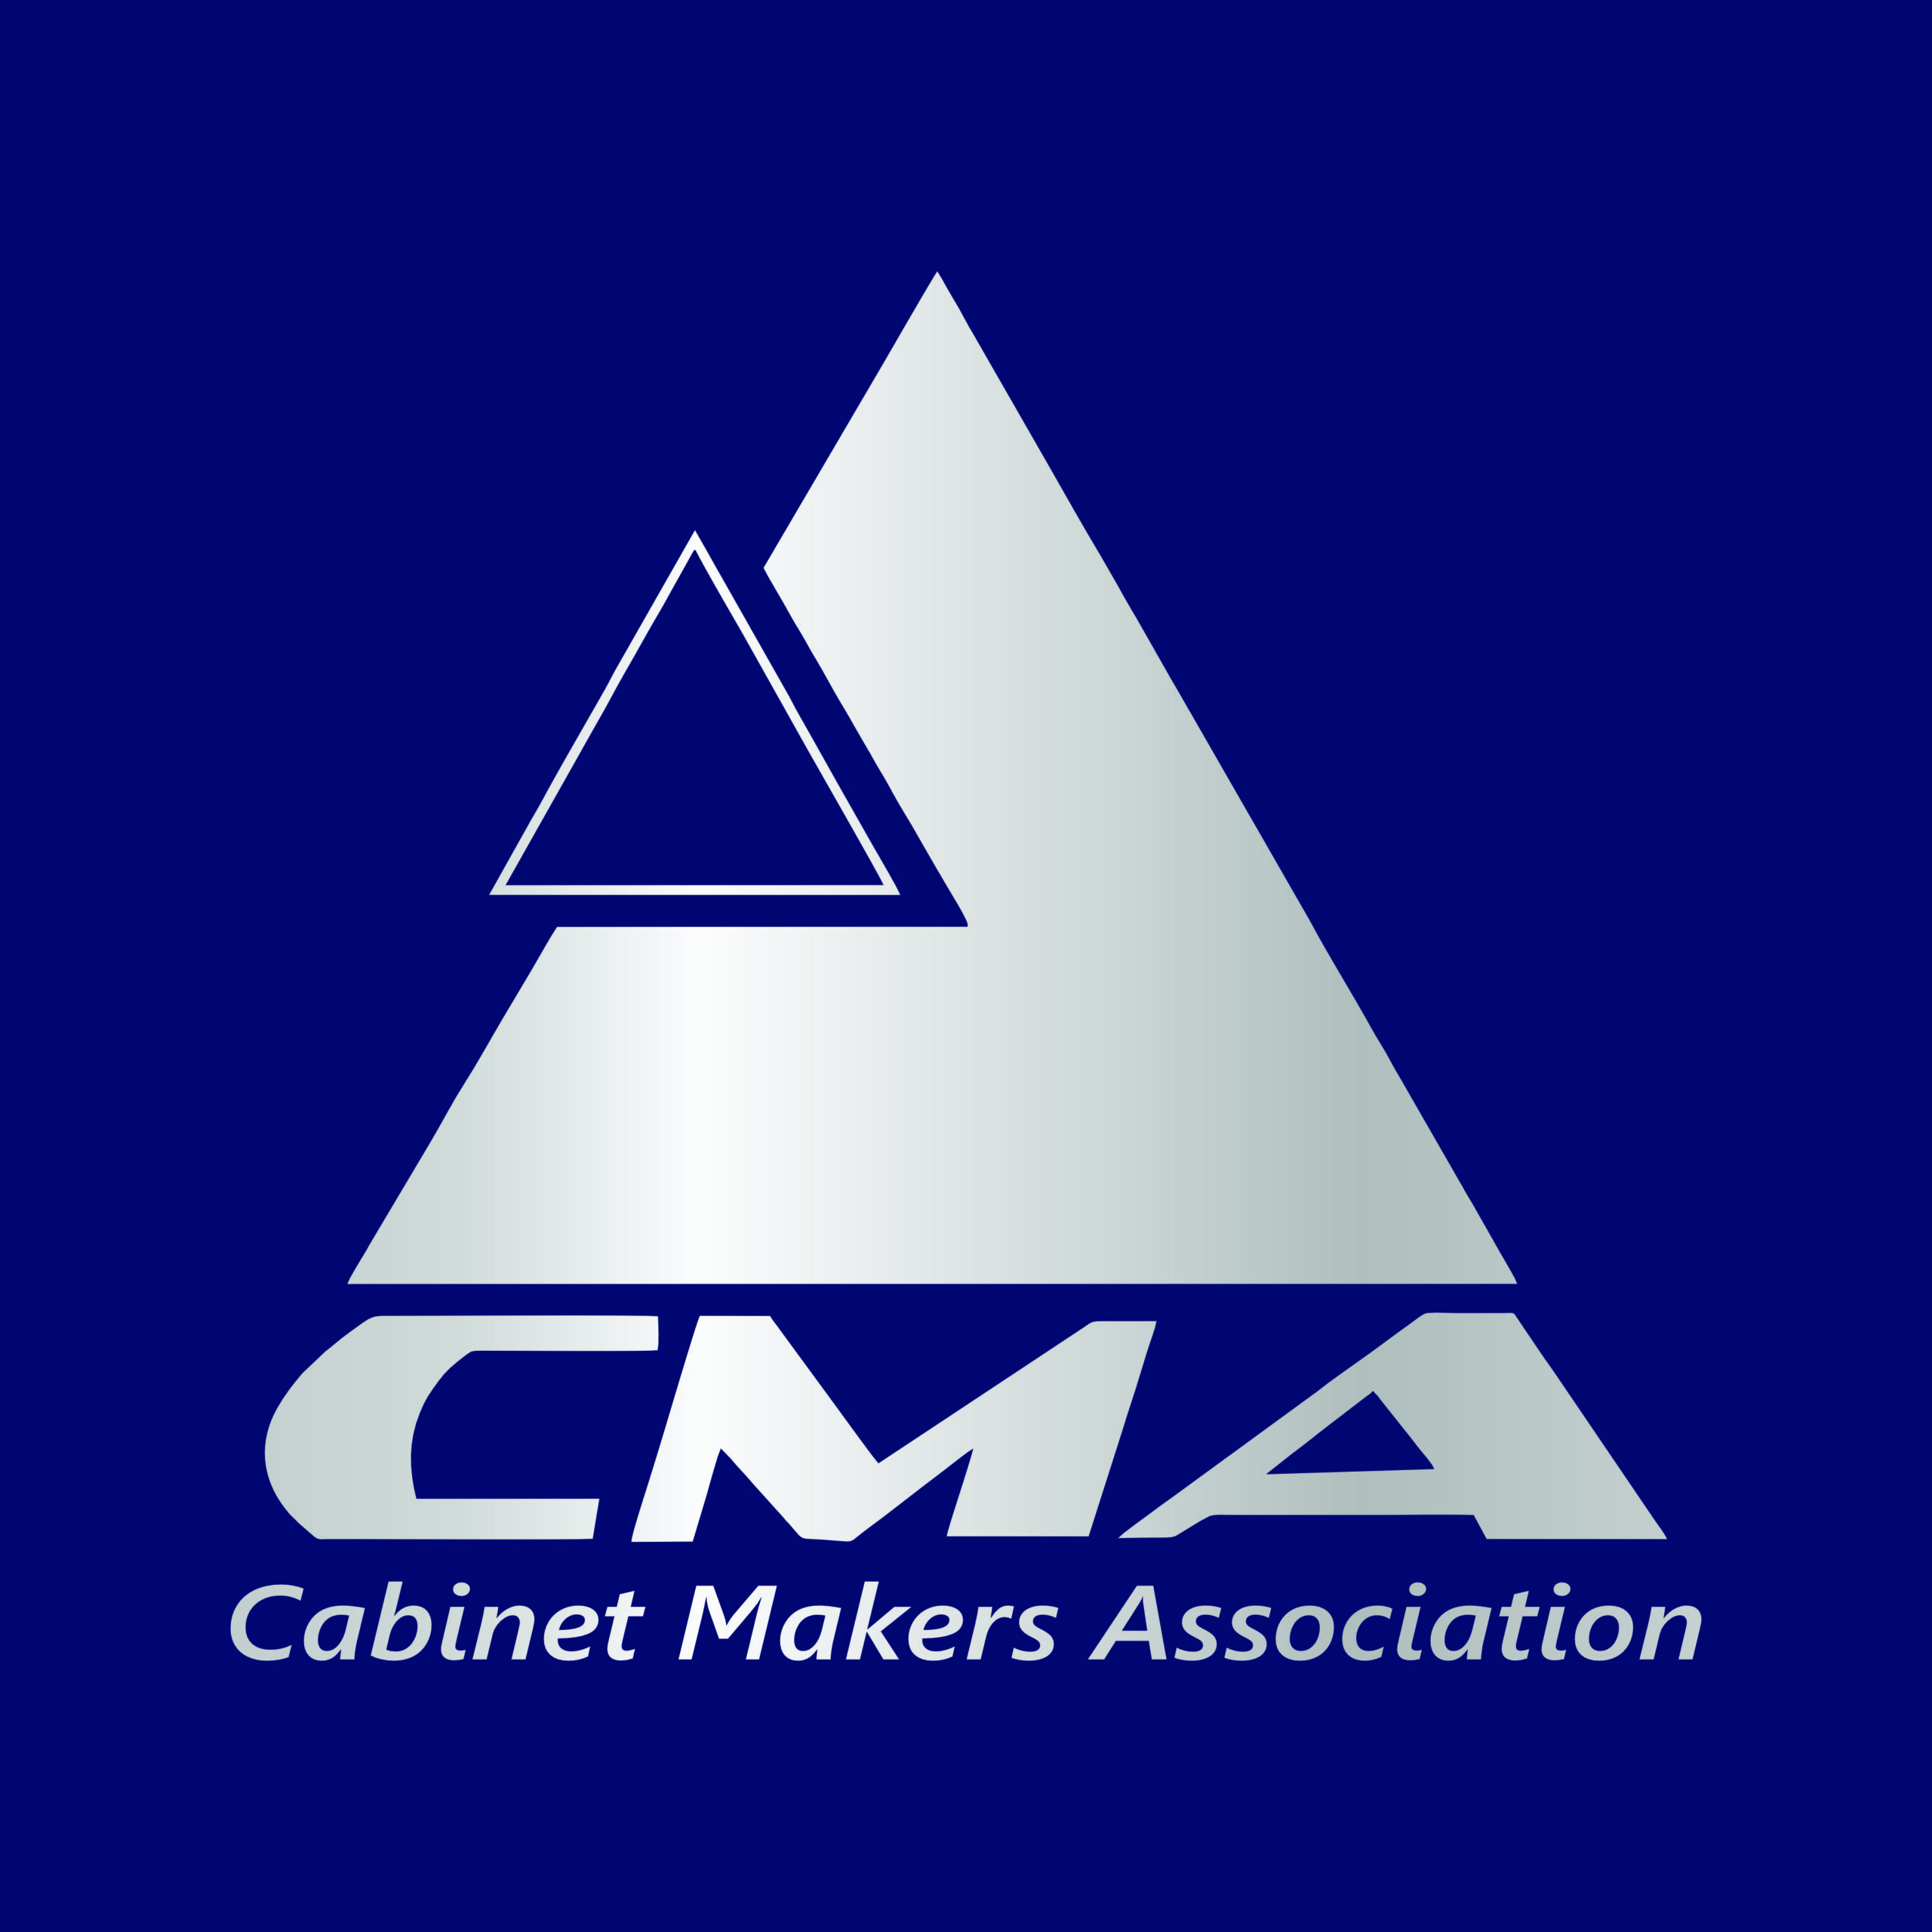 Cabinet Makers Association